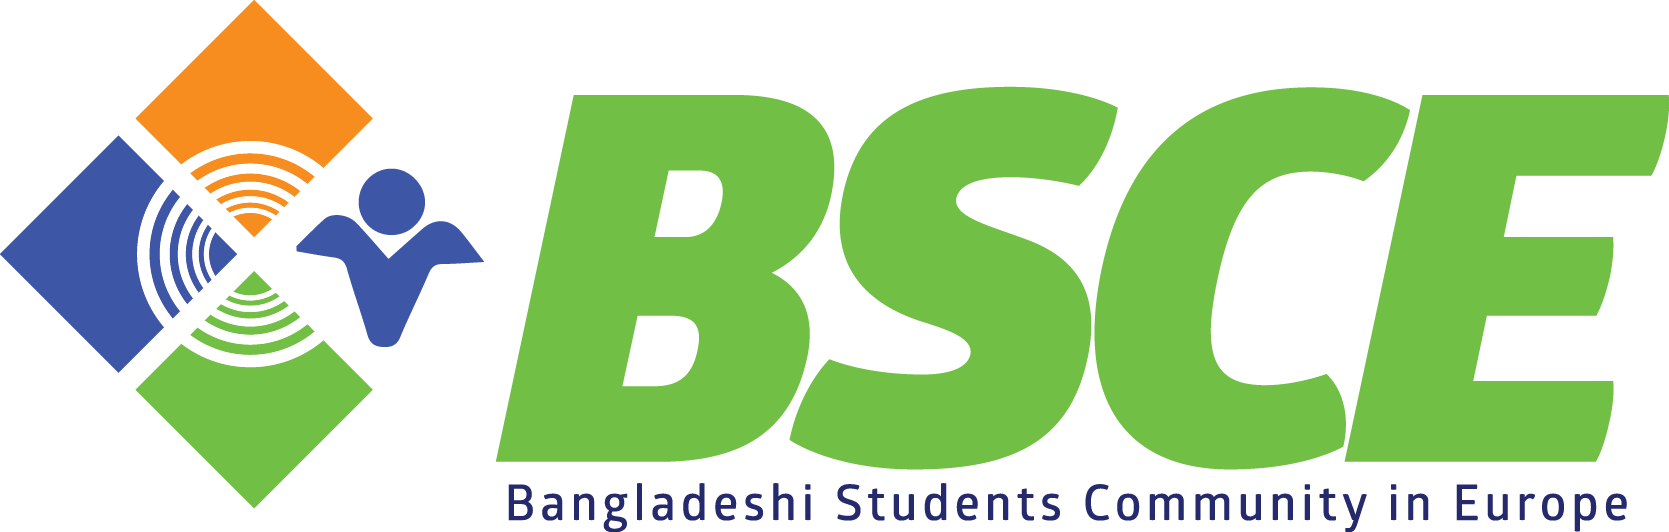 Bangladeshi Students Community in Europe